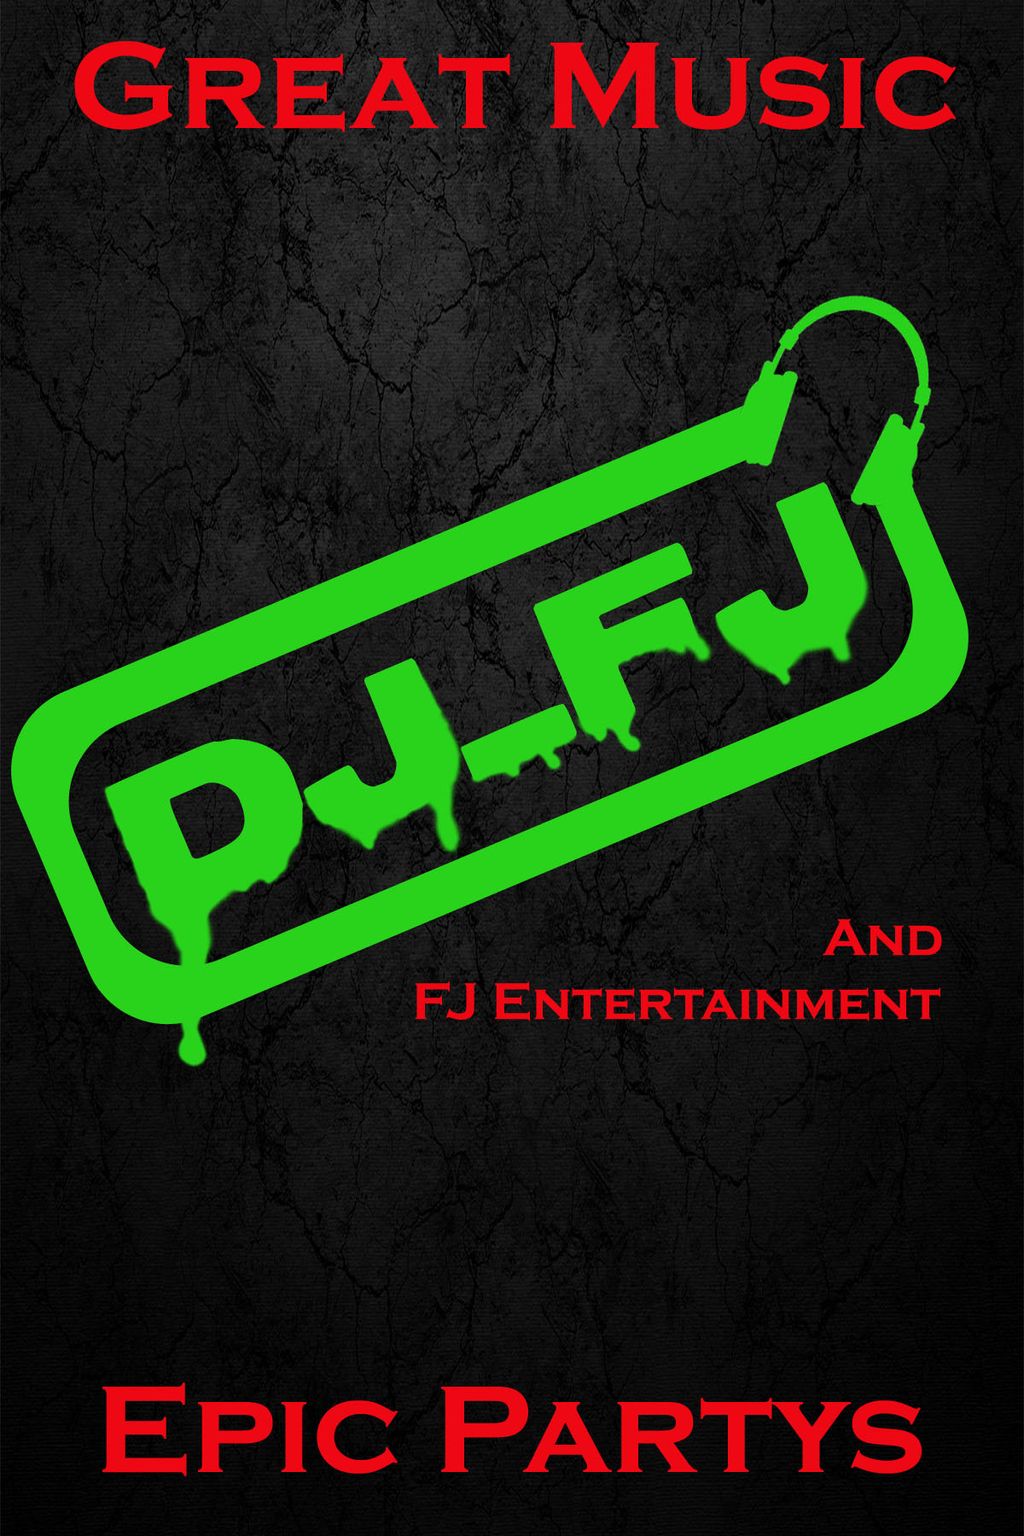 FJ Entertainment